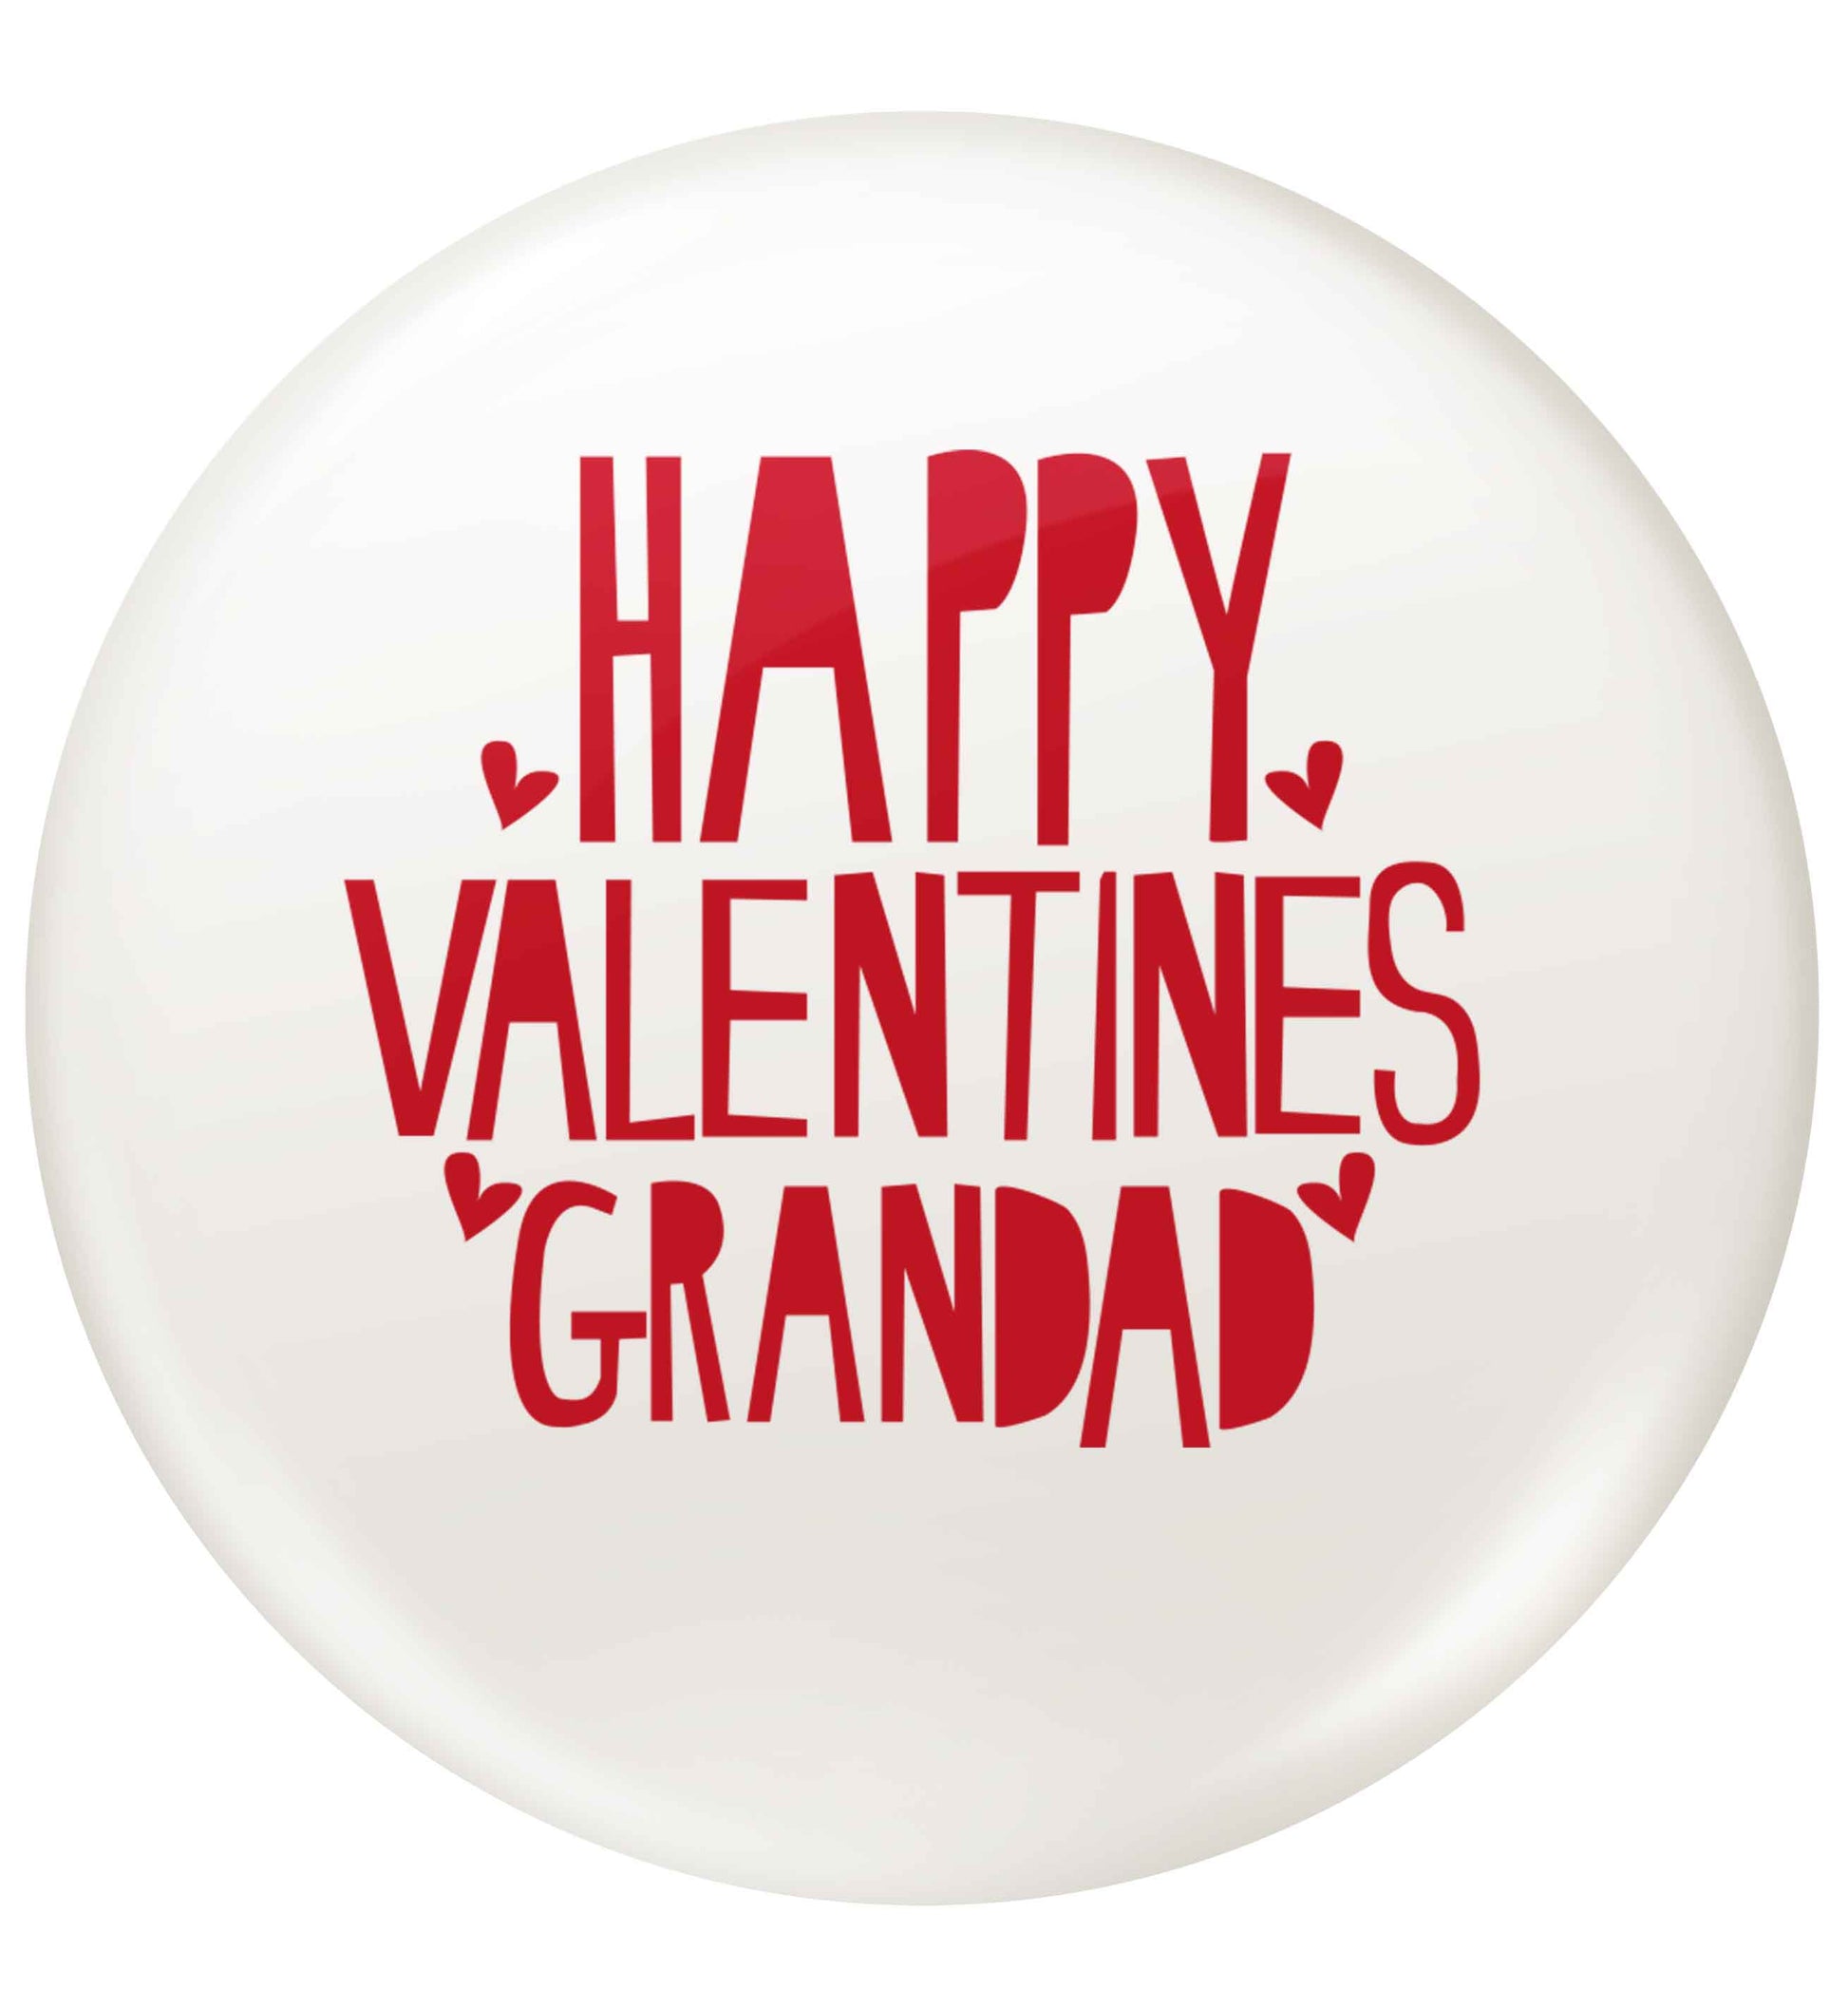 Happy valentines grandad small 25mm Pin badge